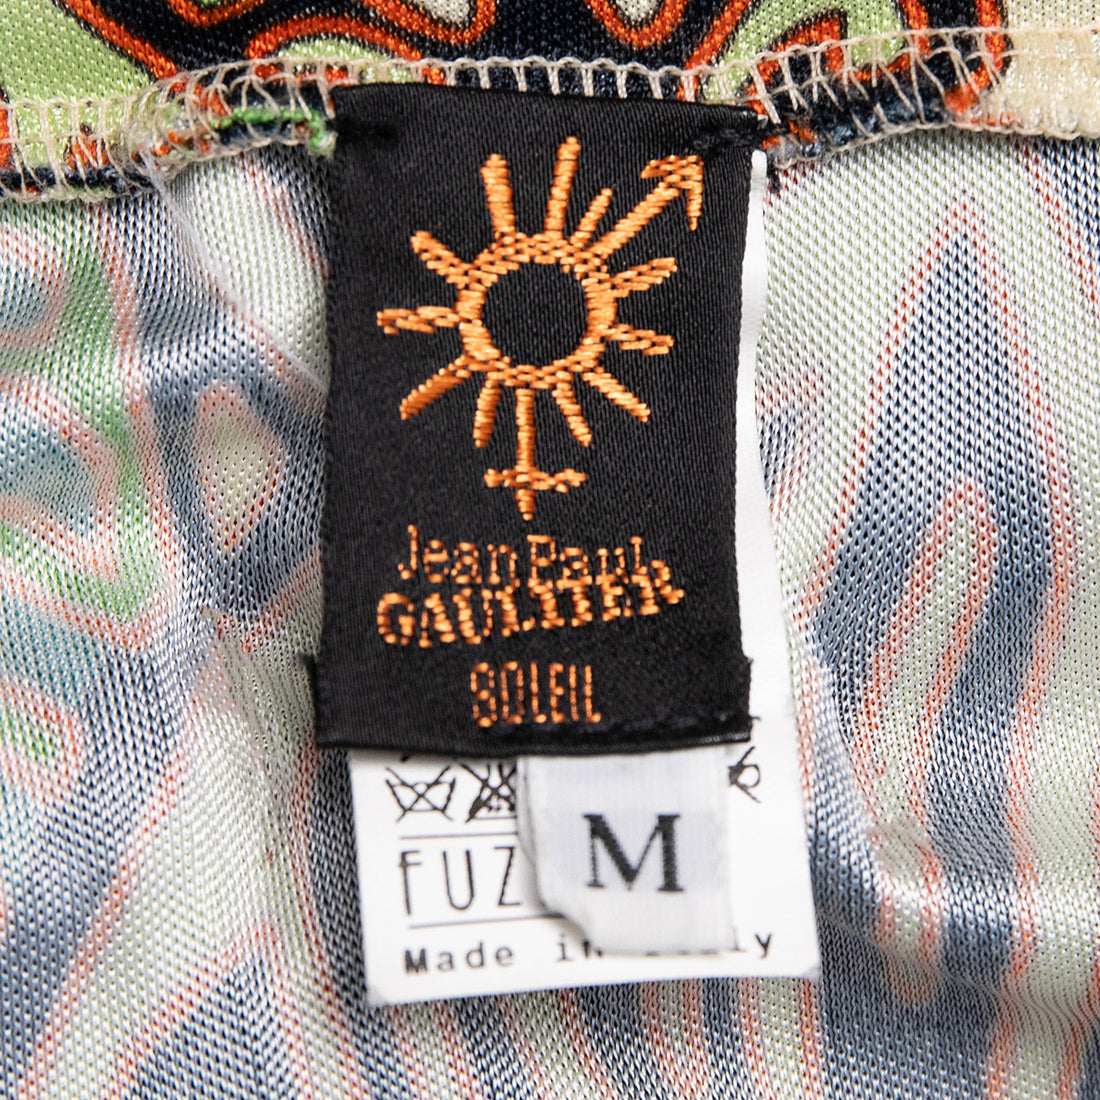 Jean Paul Gaultier Soleil Elaborately printed midi skirt with integrated tassel belt